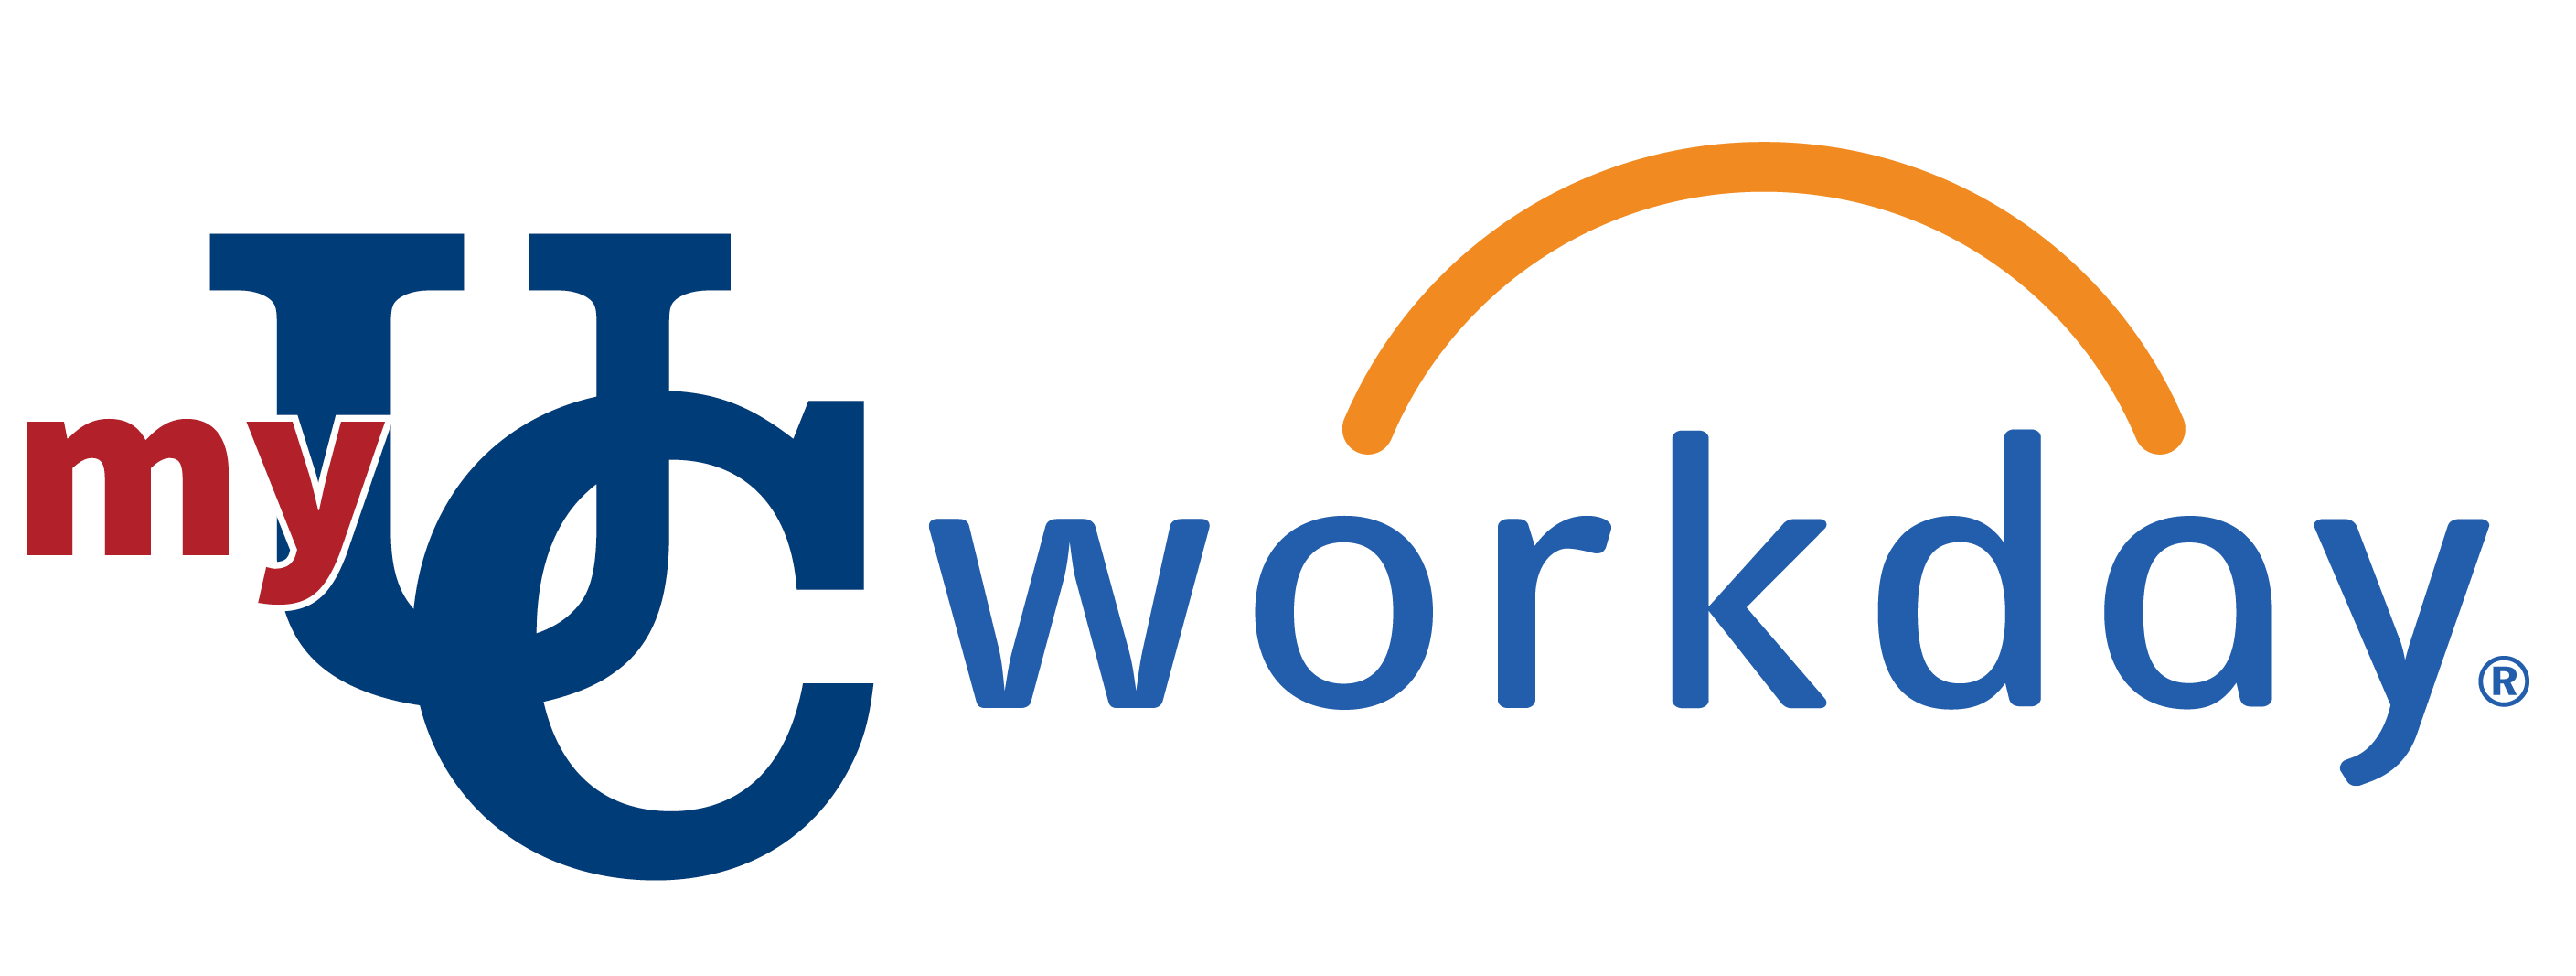 myUC Workday logo